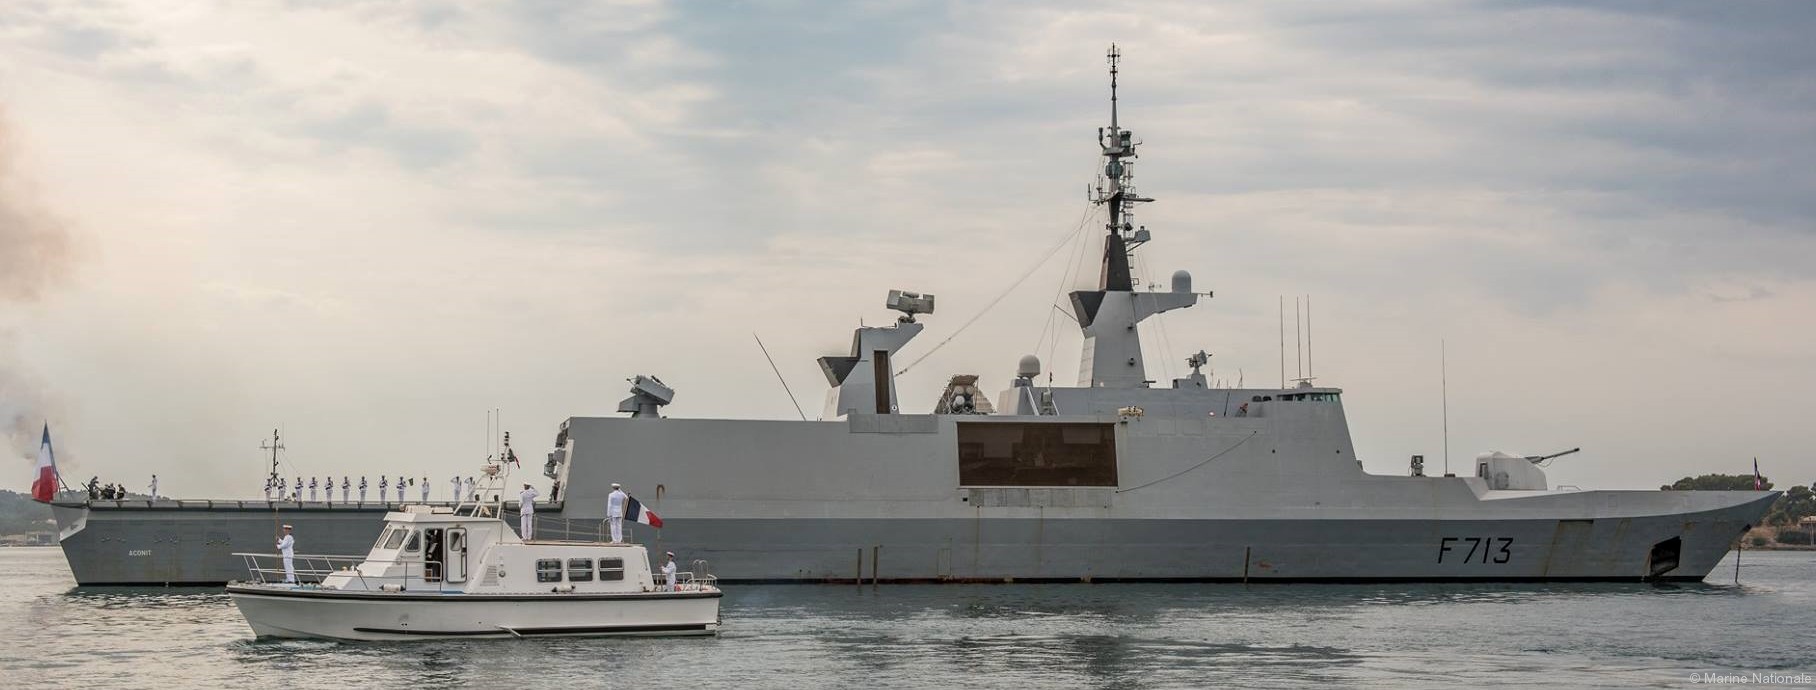 f-713 fs aconit la fayette class frigate flf french navy marine nationale 05